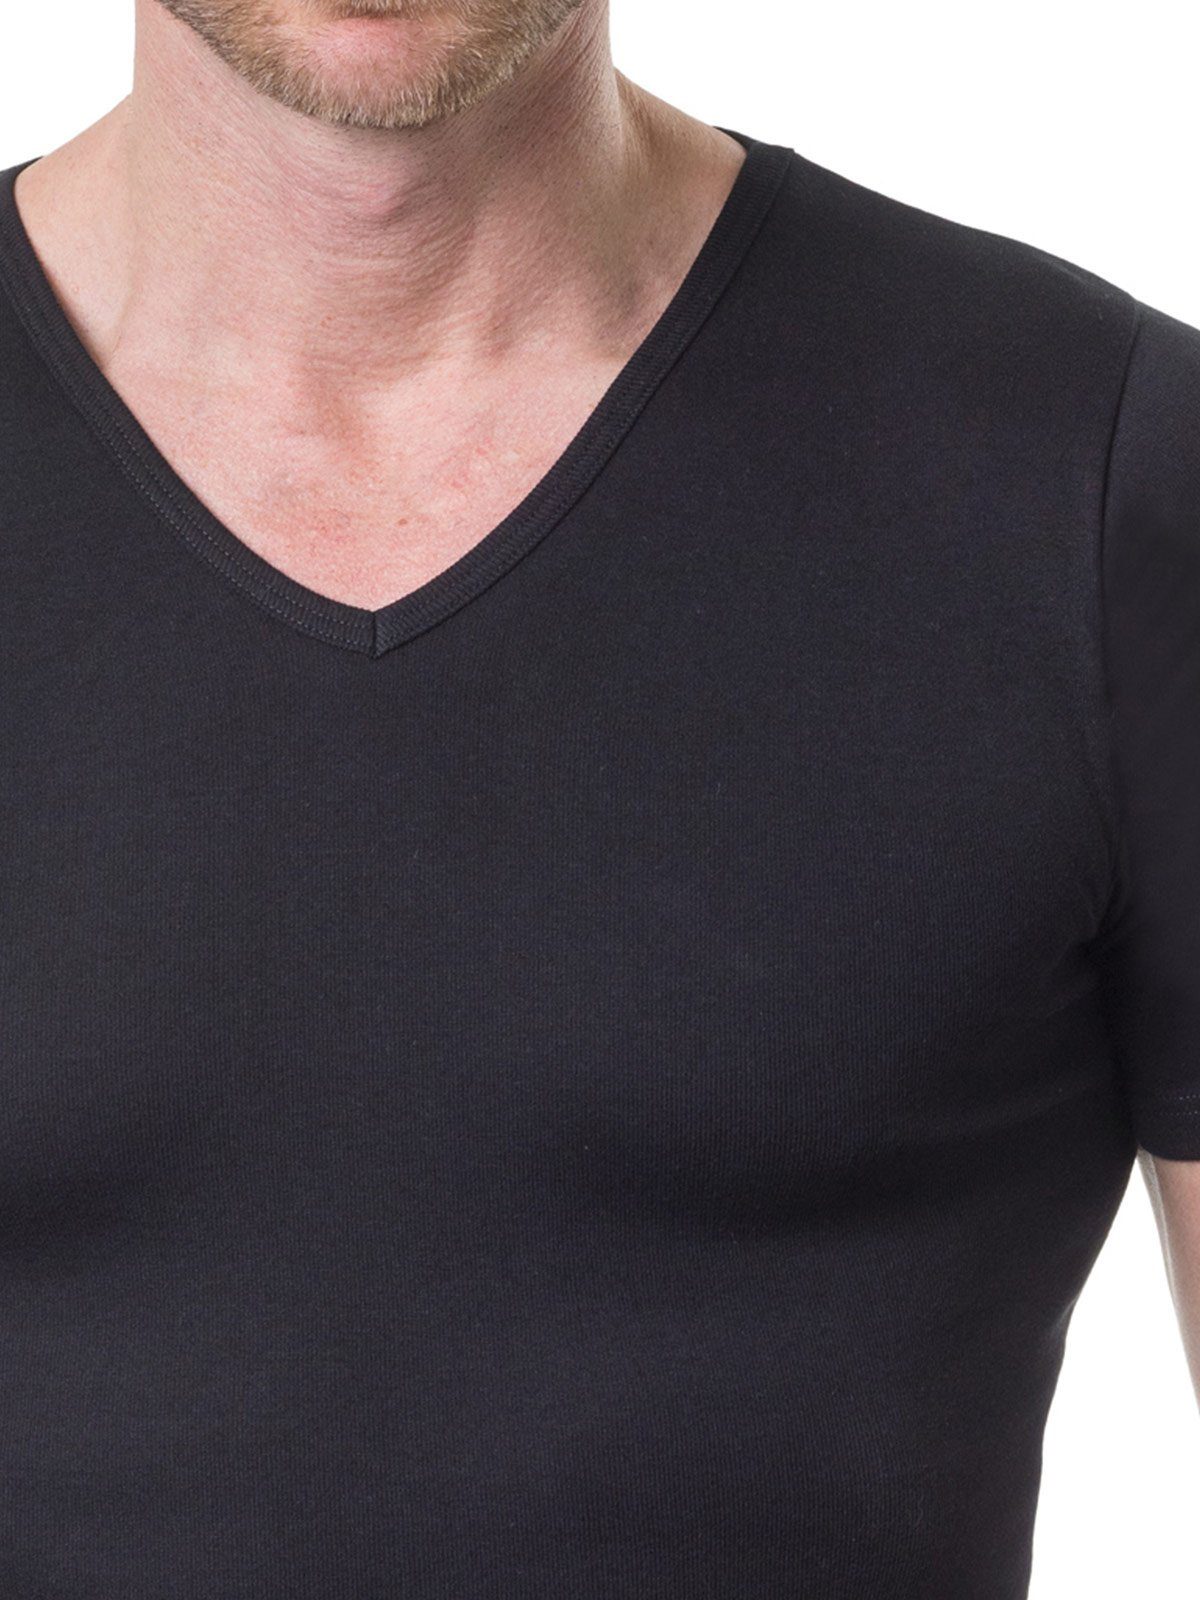 T-Shirt Sparpack schwarz hohe Markenqualität 8-St) Unterziehshirt 8er Bio Cotton Herren (Spar-Set, KUMPF